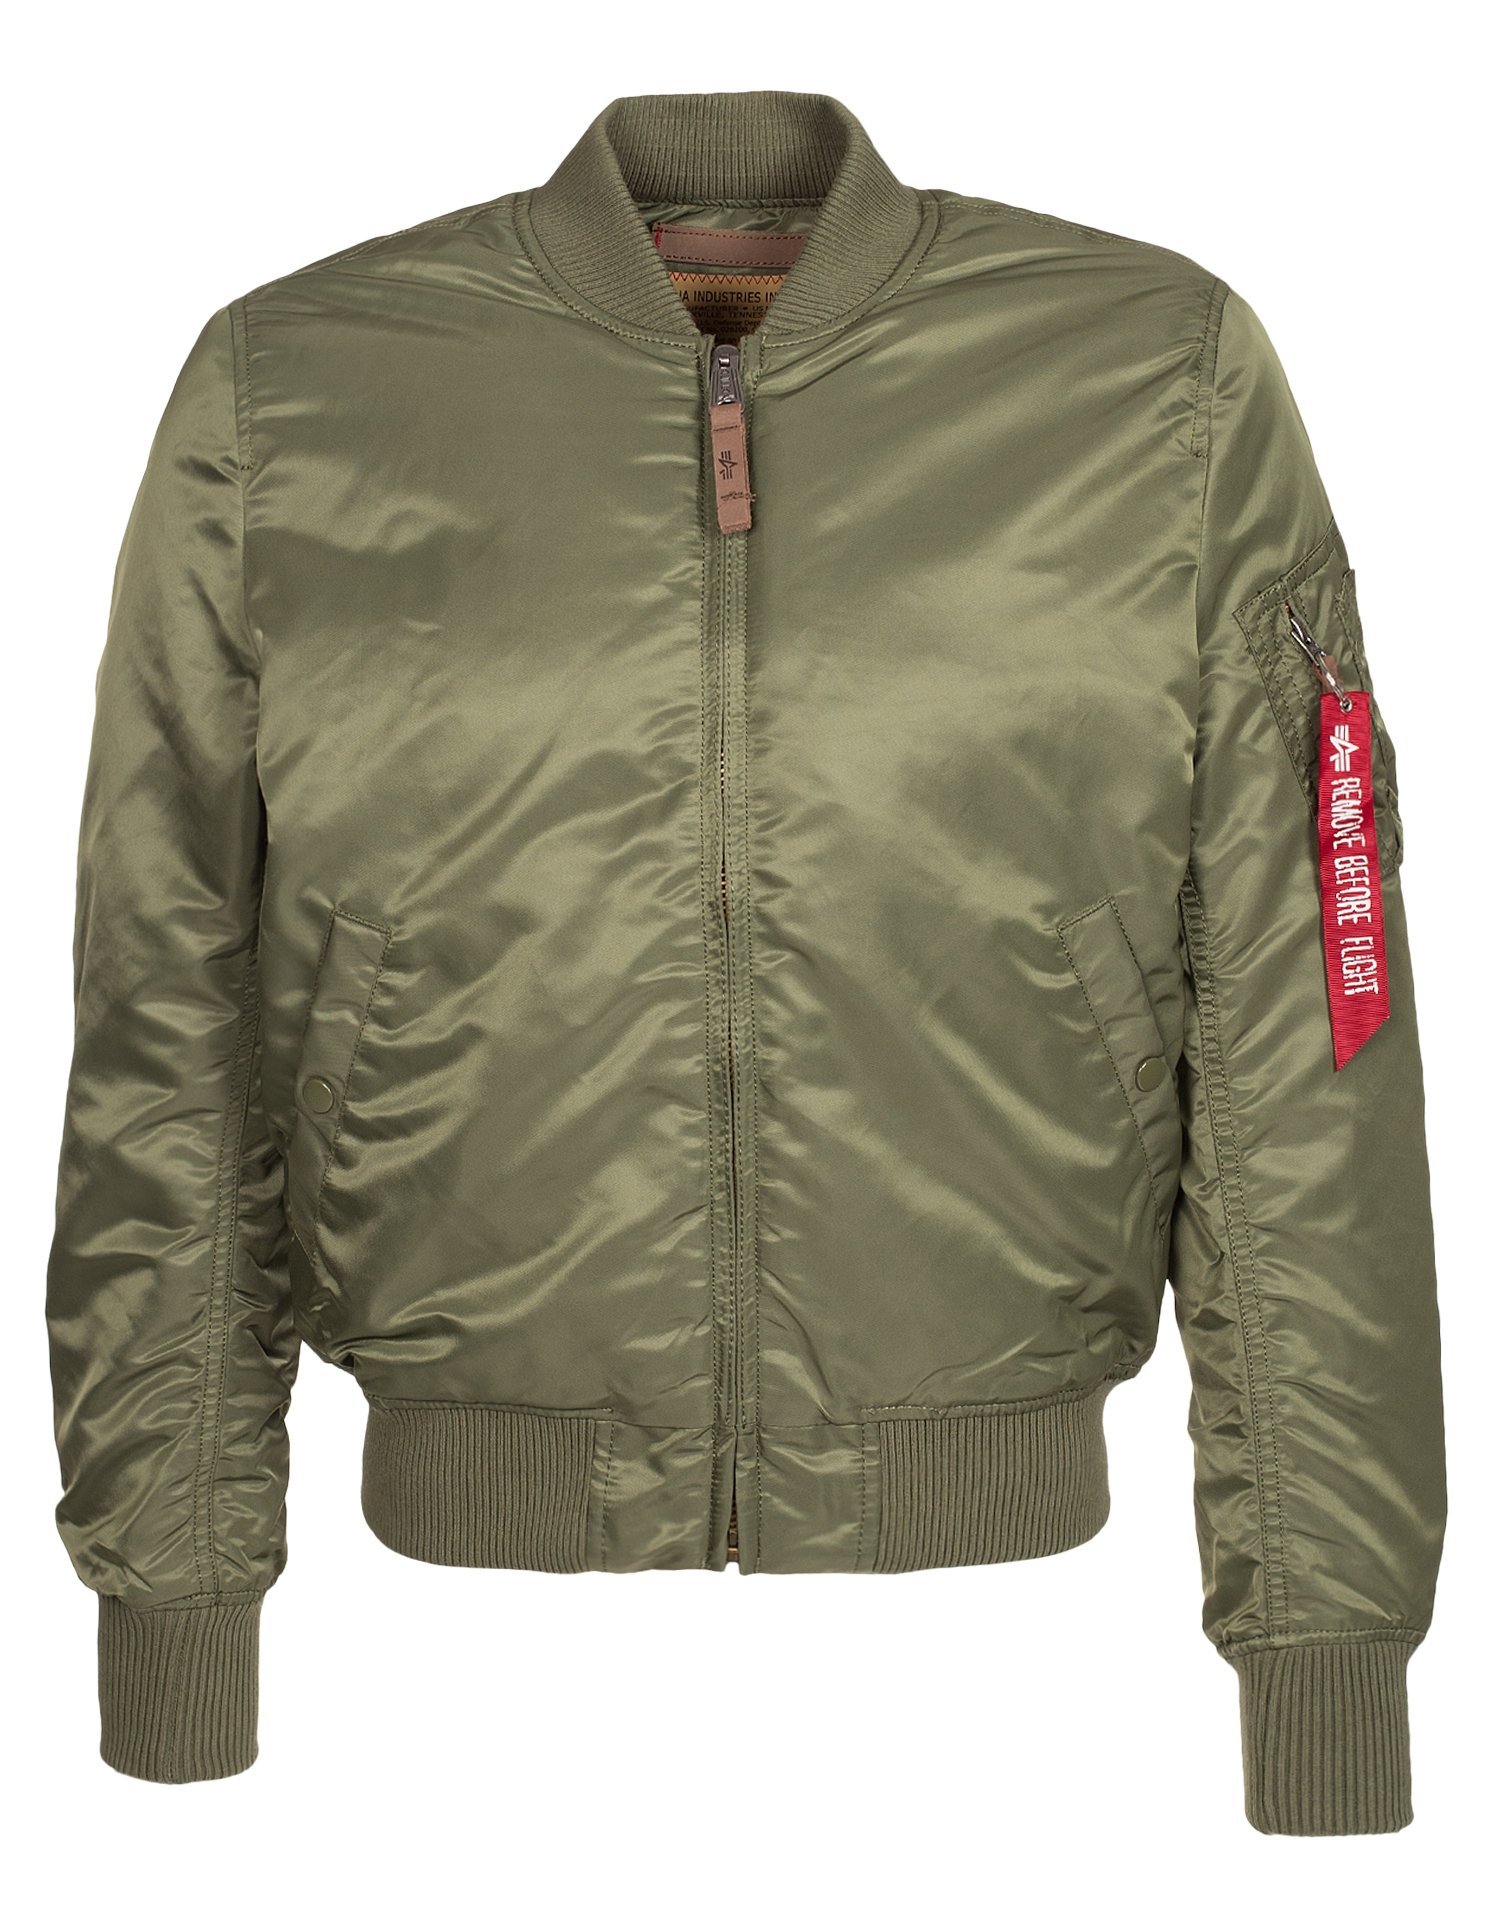 Ma - 1 Vf59 - Alpha Industries - Green - Jackets - Clothing - Men ...